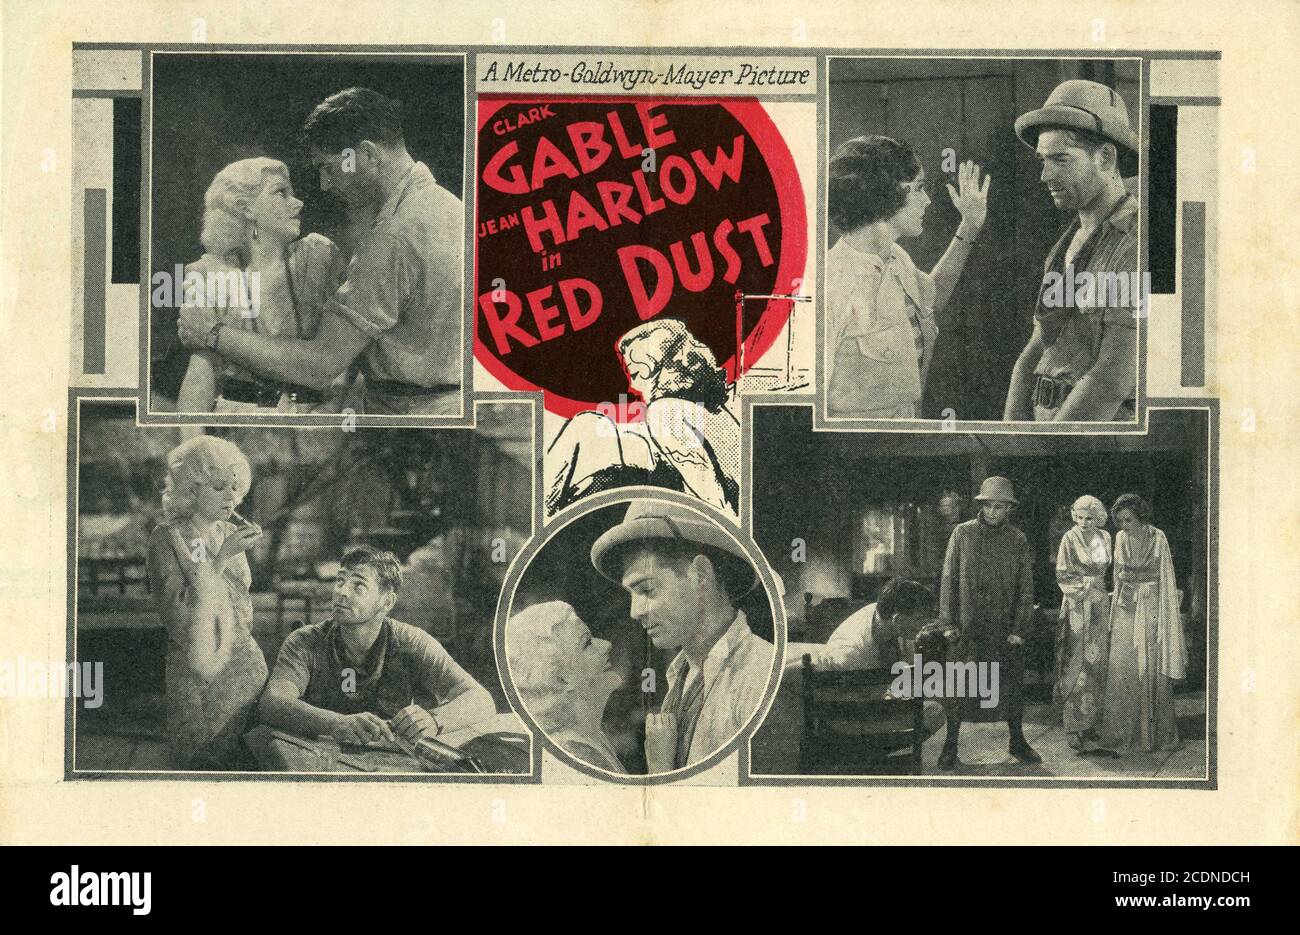 CLARK GABLE JEAN HARLOW MARY ASTOR and GENE RAYMOND in RED DUST 1932 director VICTOR FLEMING screenplay John Lee Mahin Metro Goldwyn Mayer Stock Photo